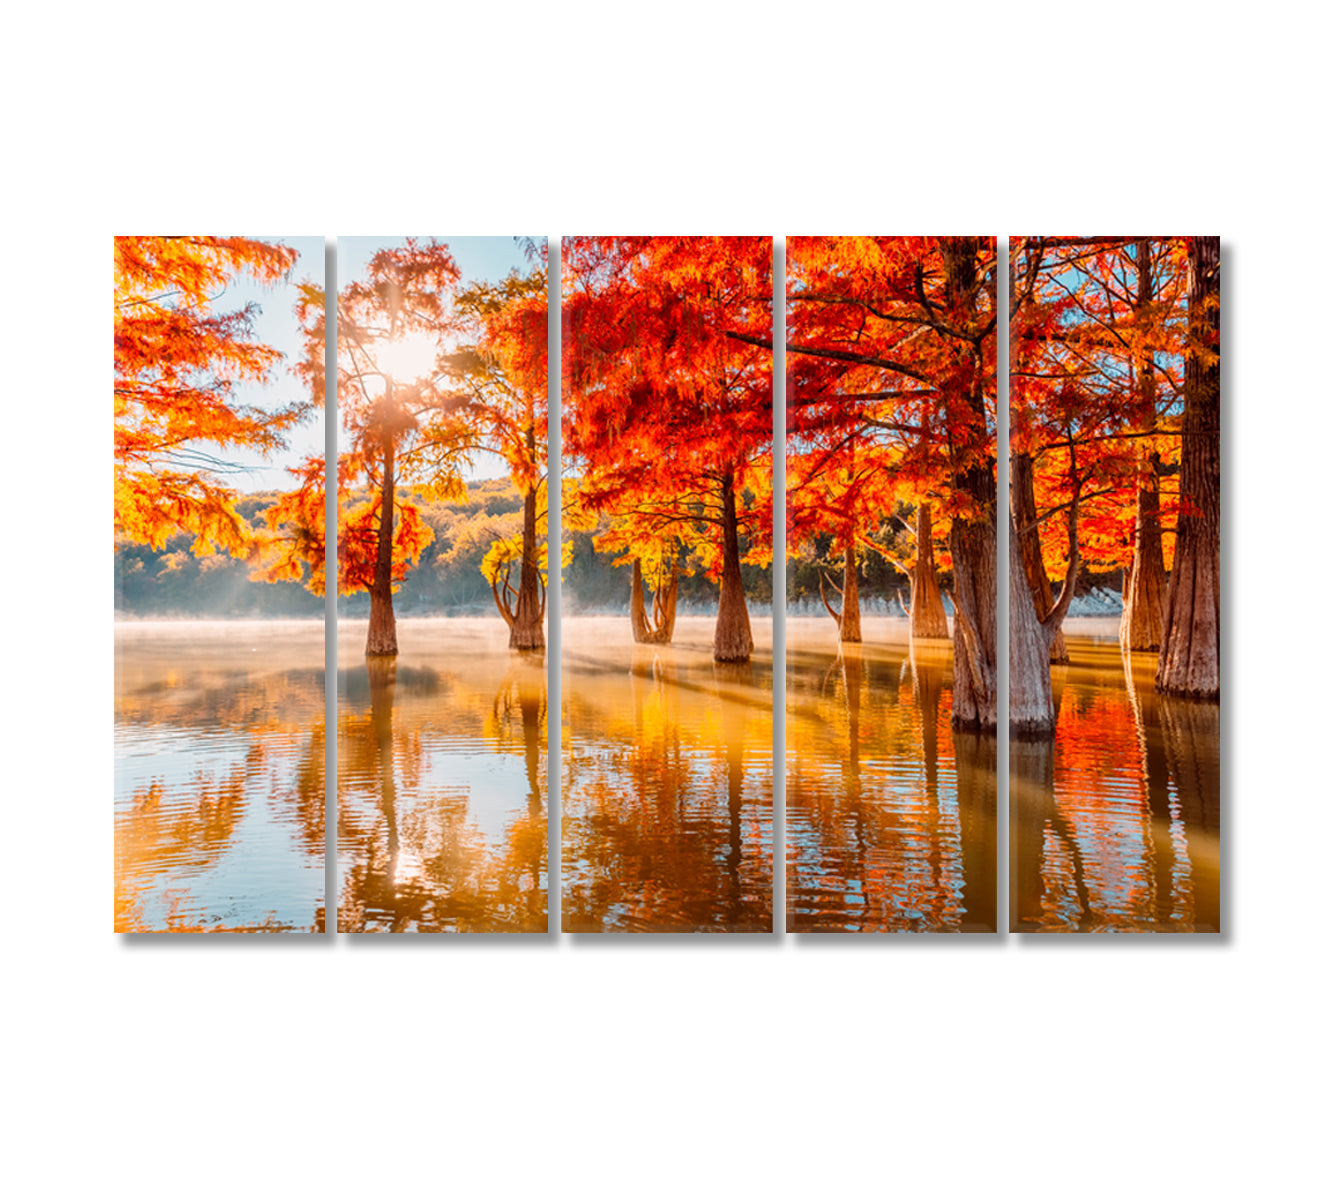 Cypress Trees in Lake Wall Art-Canvas Print-CetArt-5 Panels-36x24 inches-CetArt